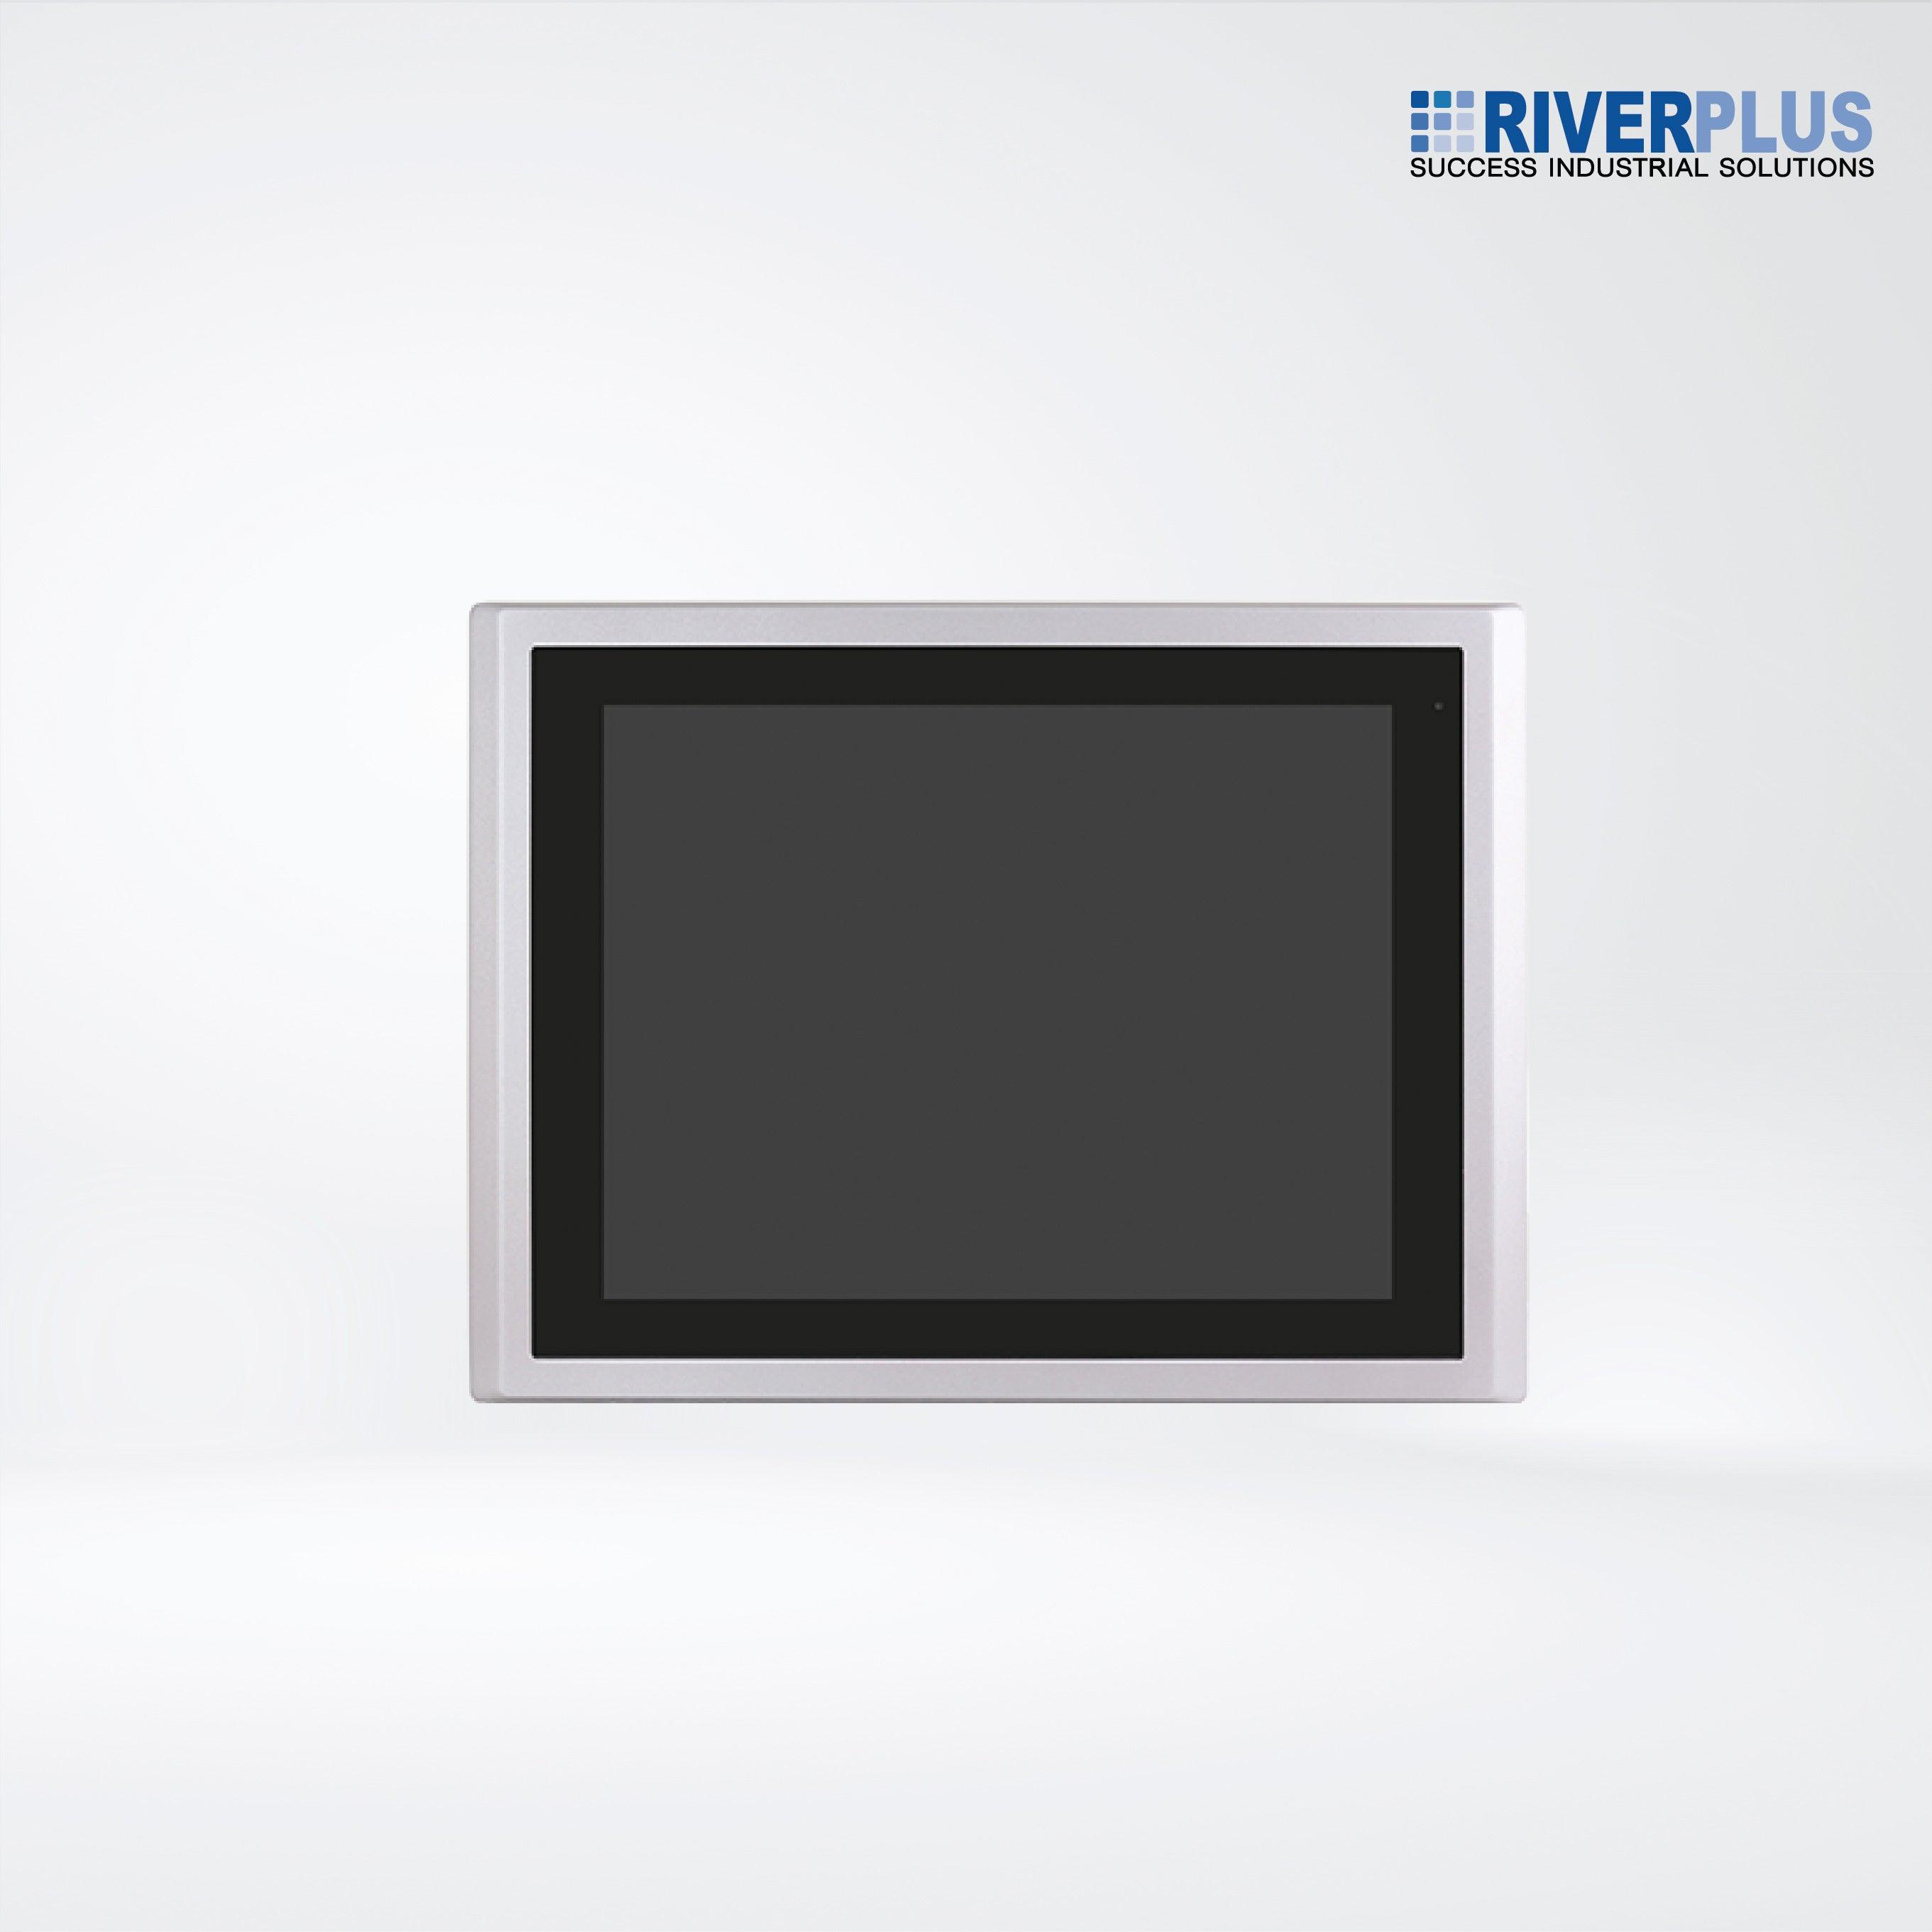 ViPAC-815G 15” Intel Celeron N2930 Fanless Expandable Panel PC - Riverplus